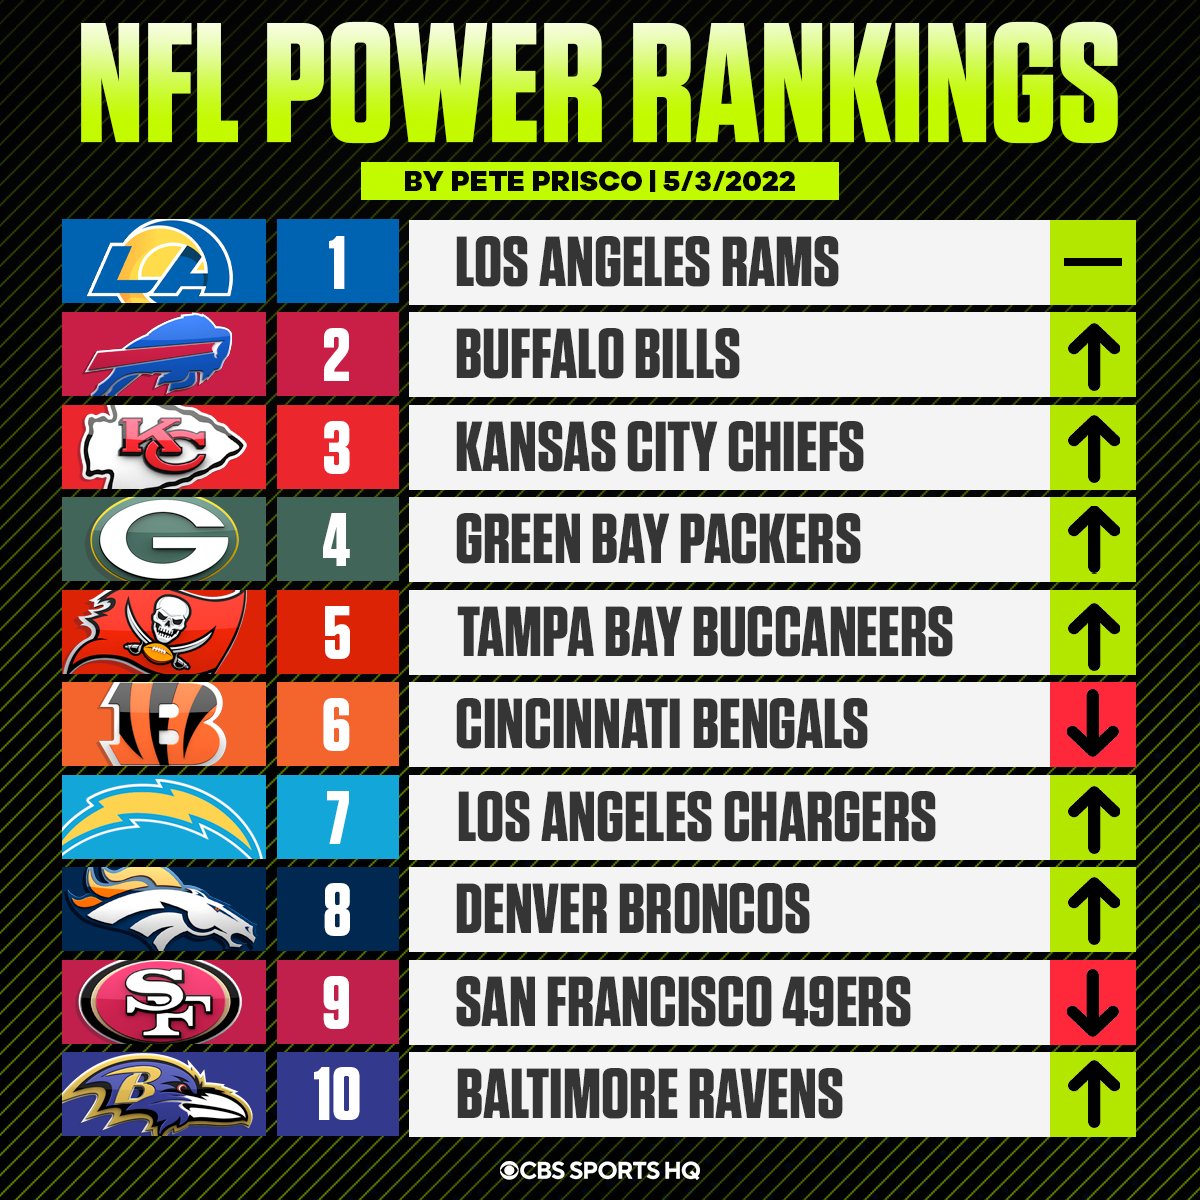 NFL Power Rankings 2022 - Preseason 1-32 poll and hot seat